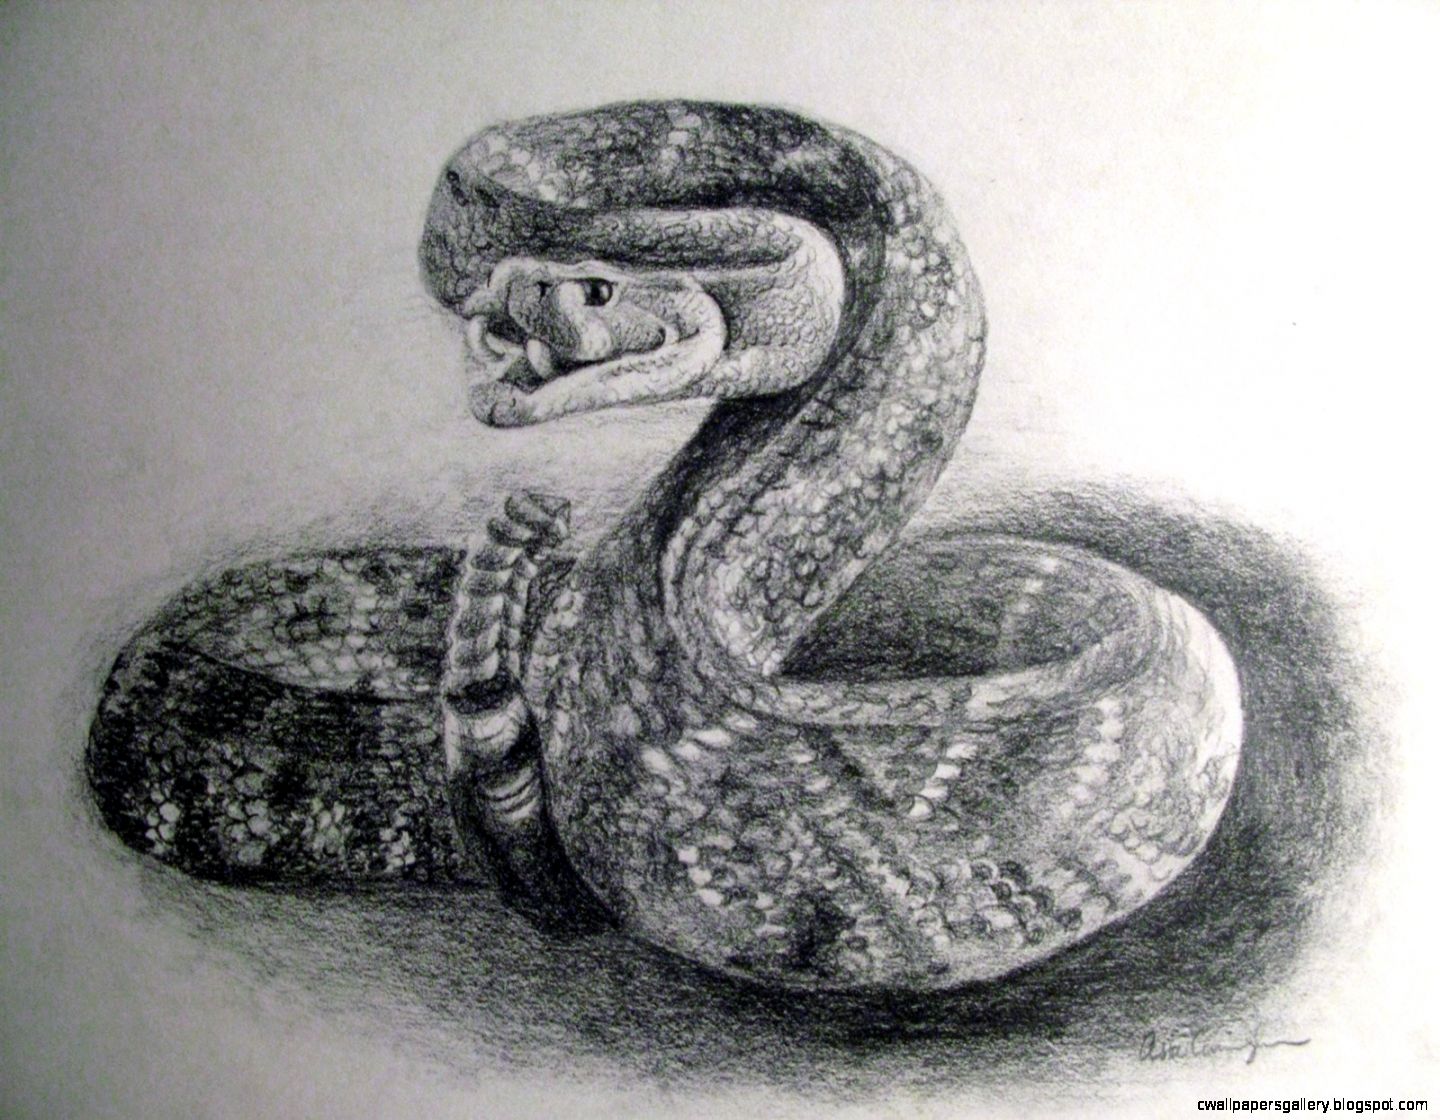 Snake Drawings In Pencil | Wallpapers Gallery